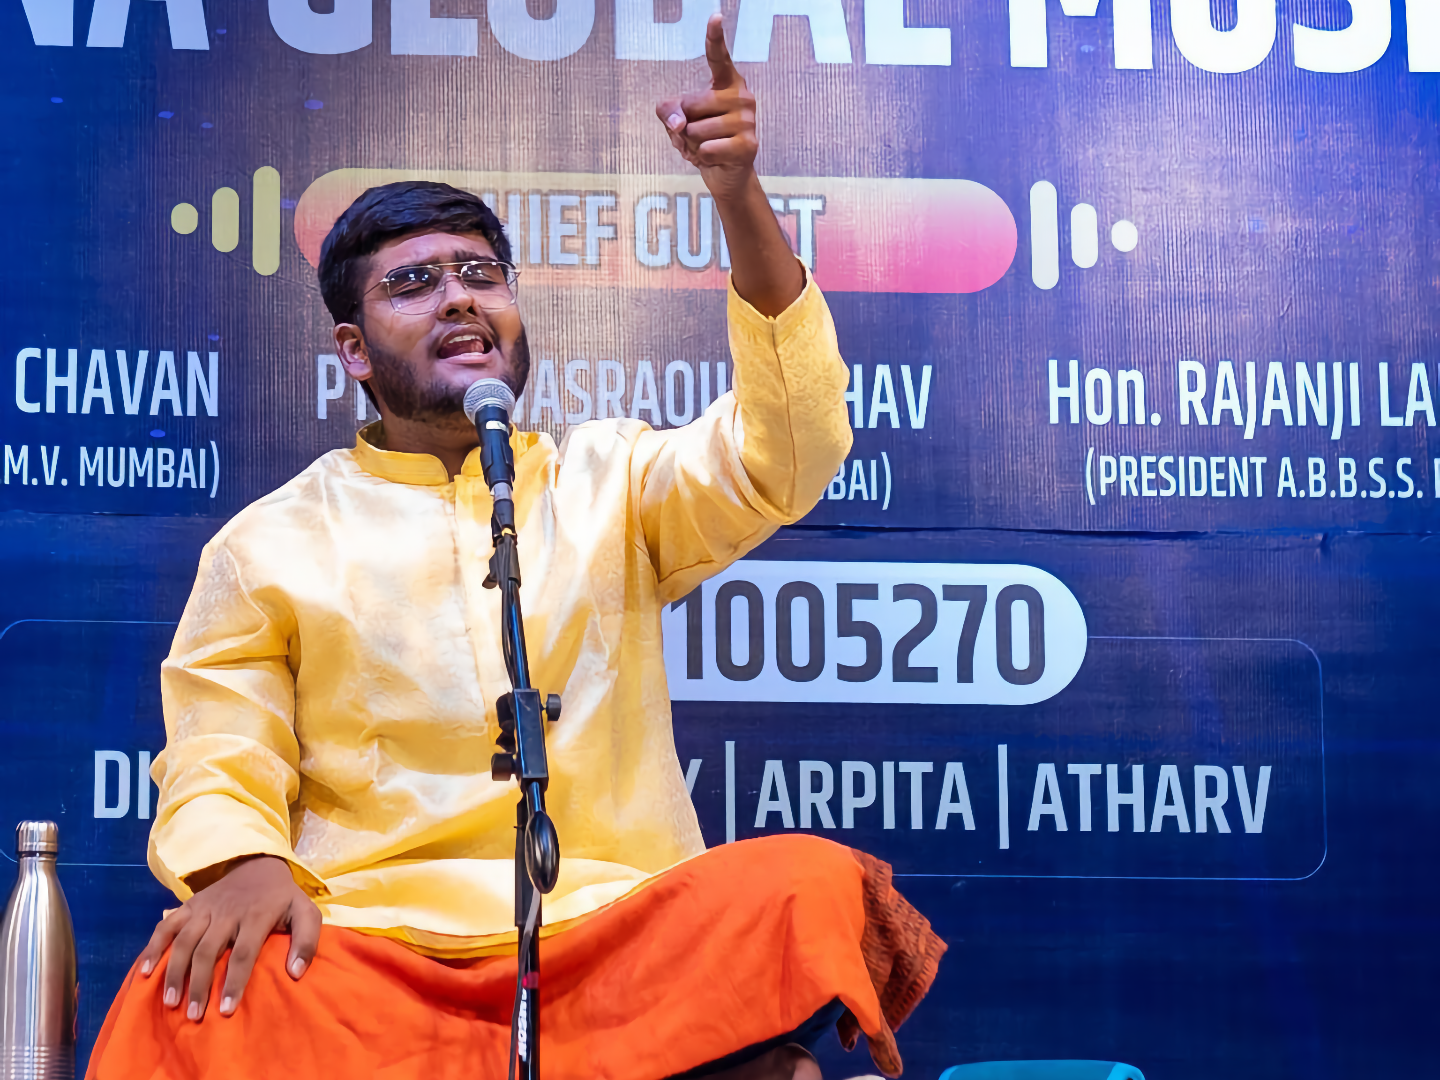 Swaropasana Global Music Academy Event